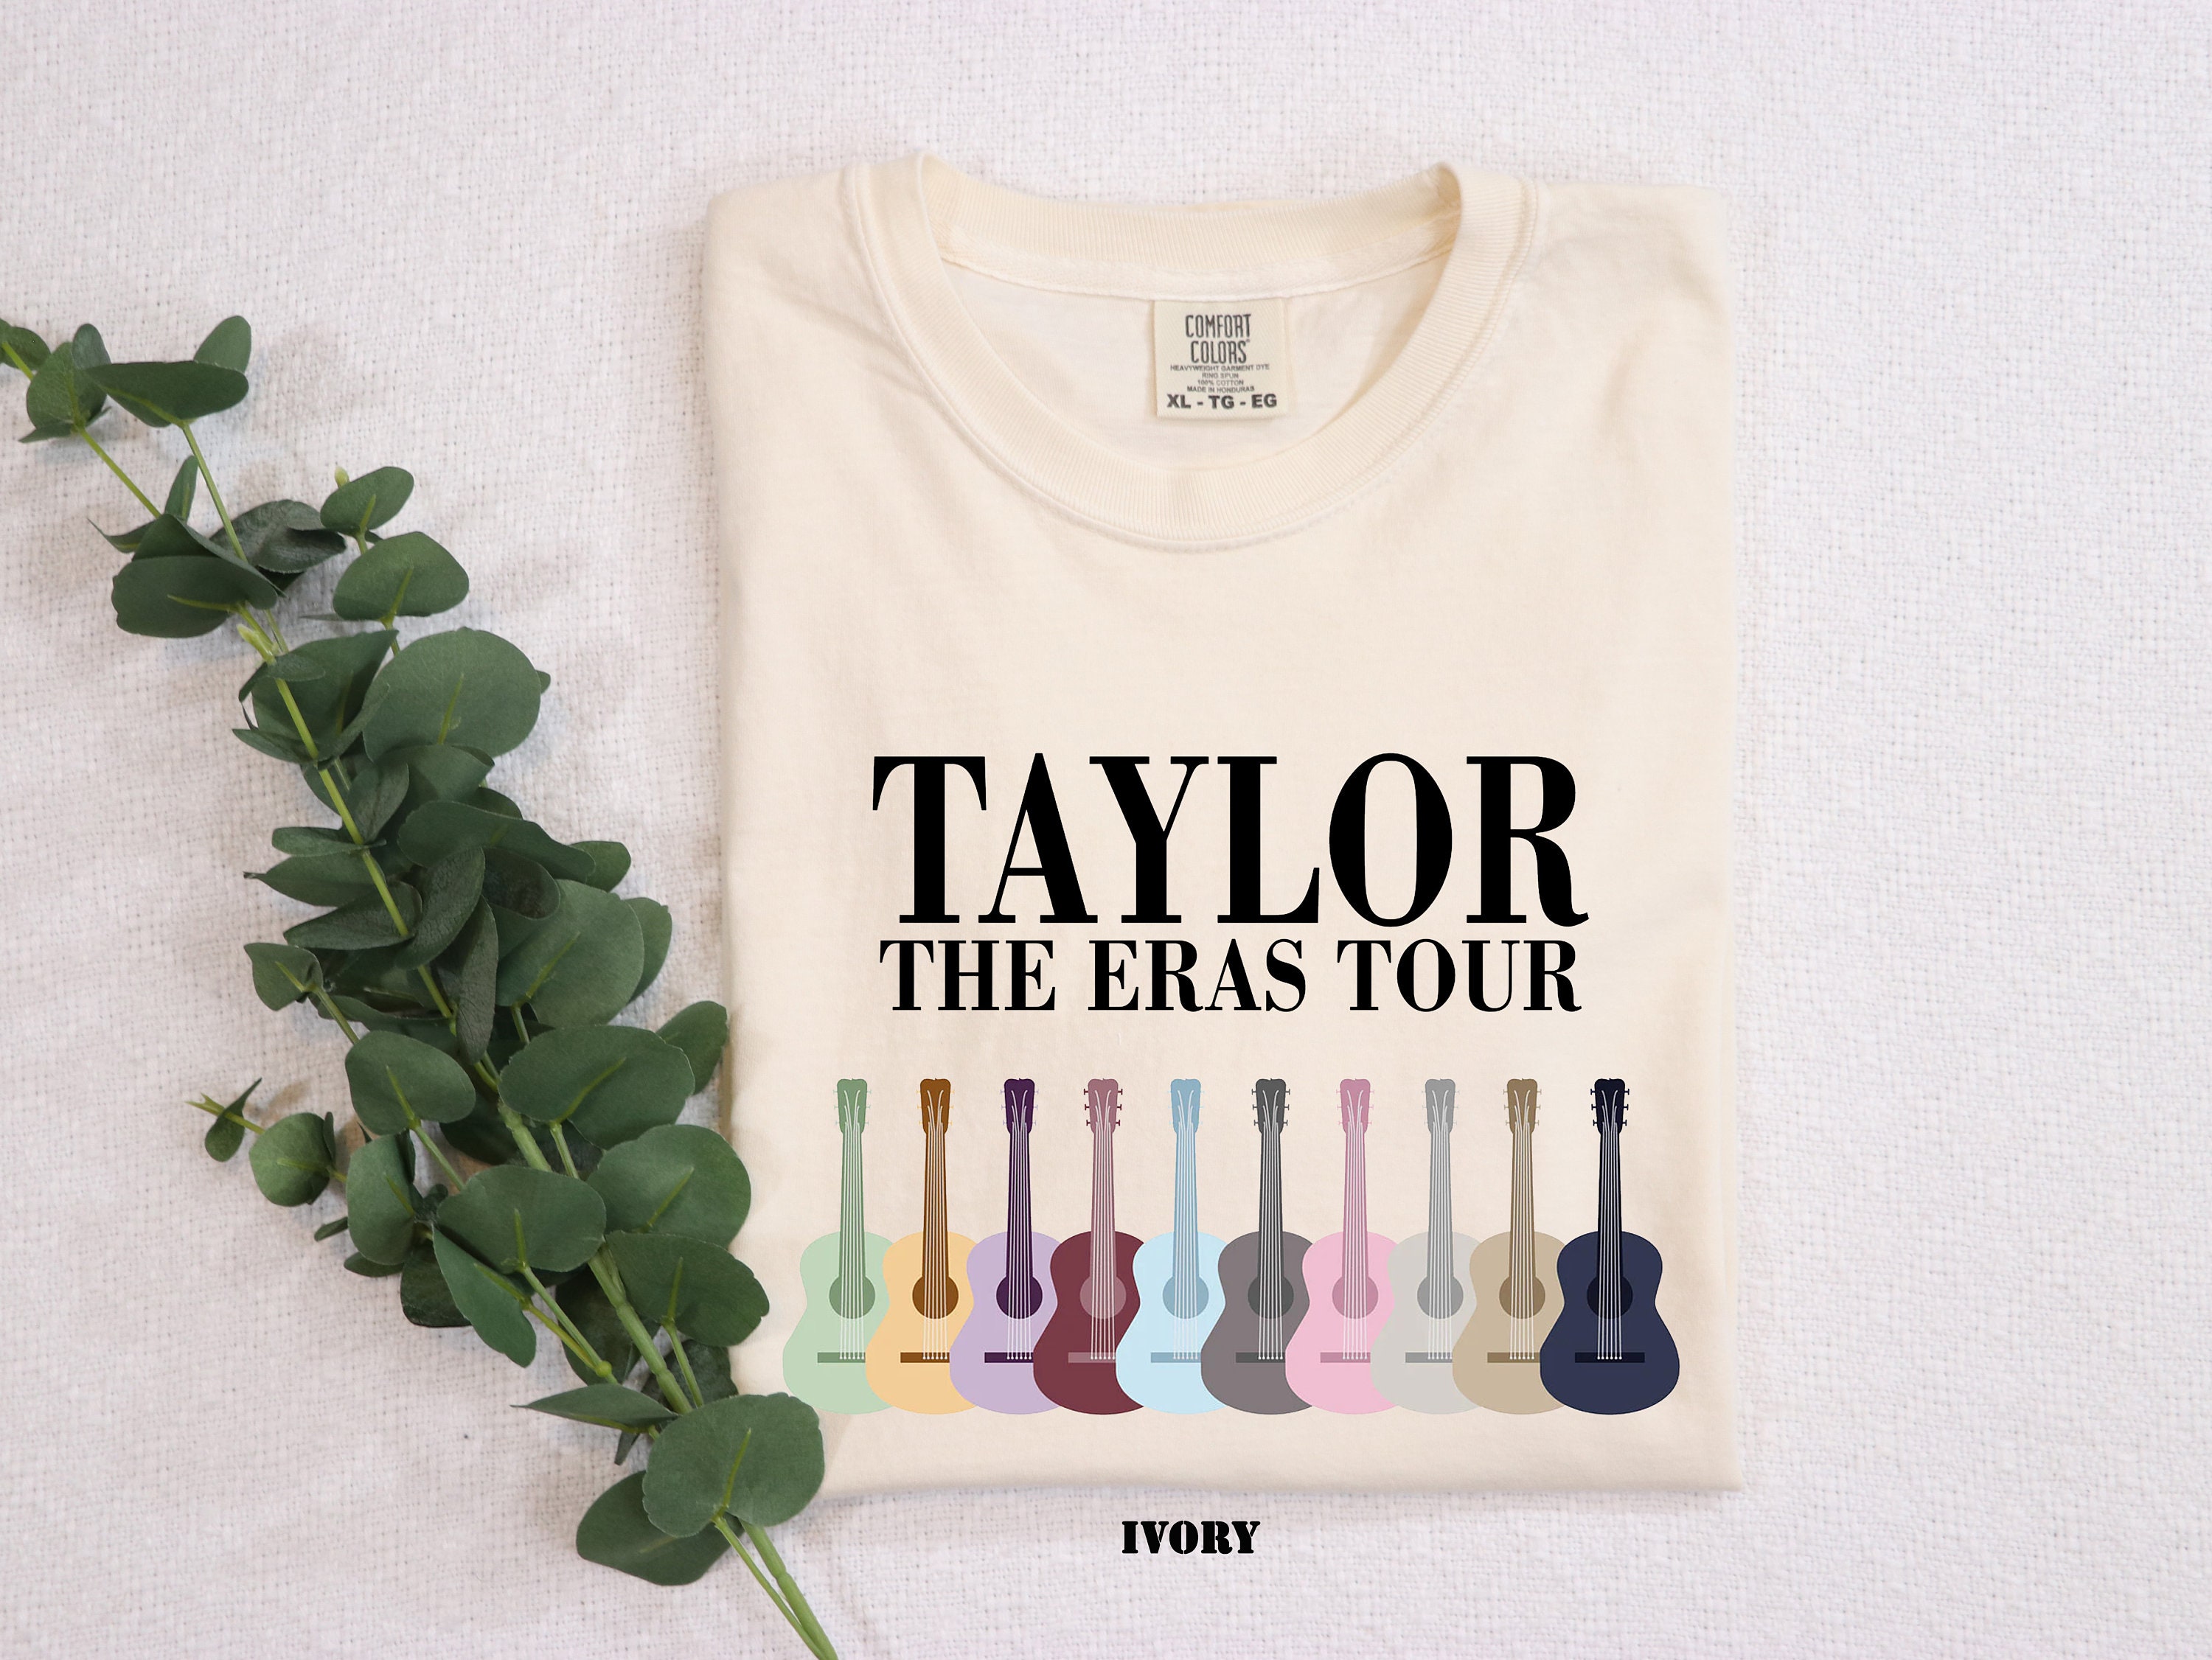 Swiftie Shirt, Retro Swiftie T-shirt, Eras Tour Shirt, Eras Concert Gift, Swifty  Merch Shirt, Midnights Swiftie Tee, Vintage Swiftie Outfits 